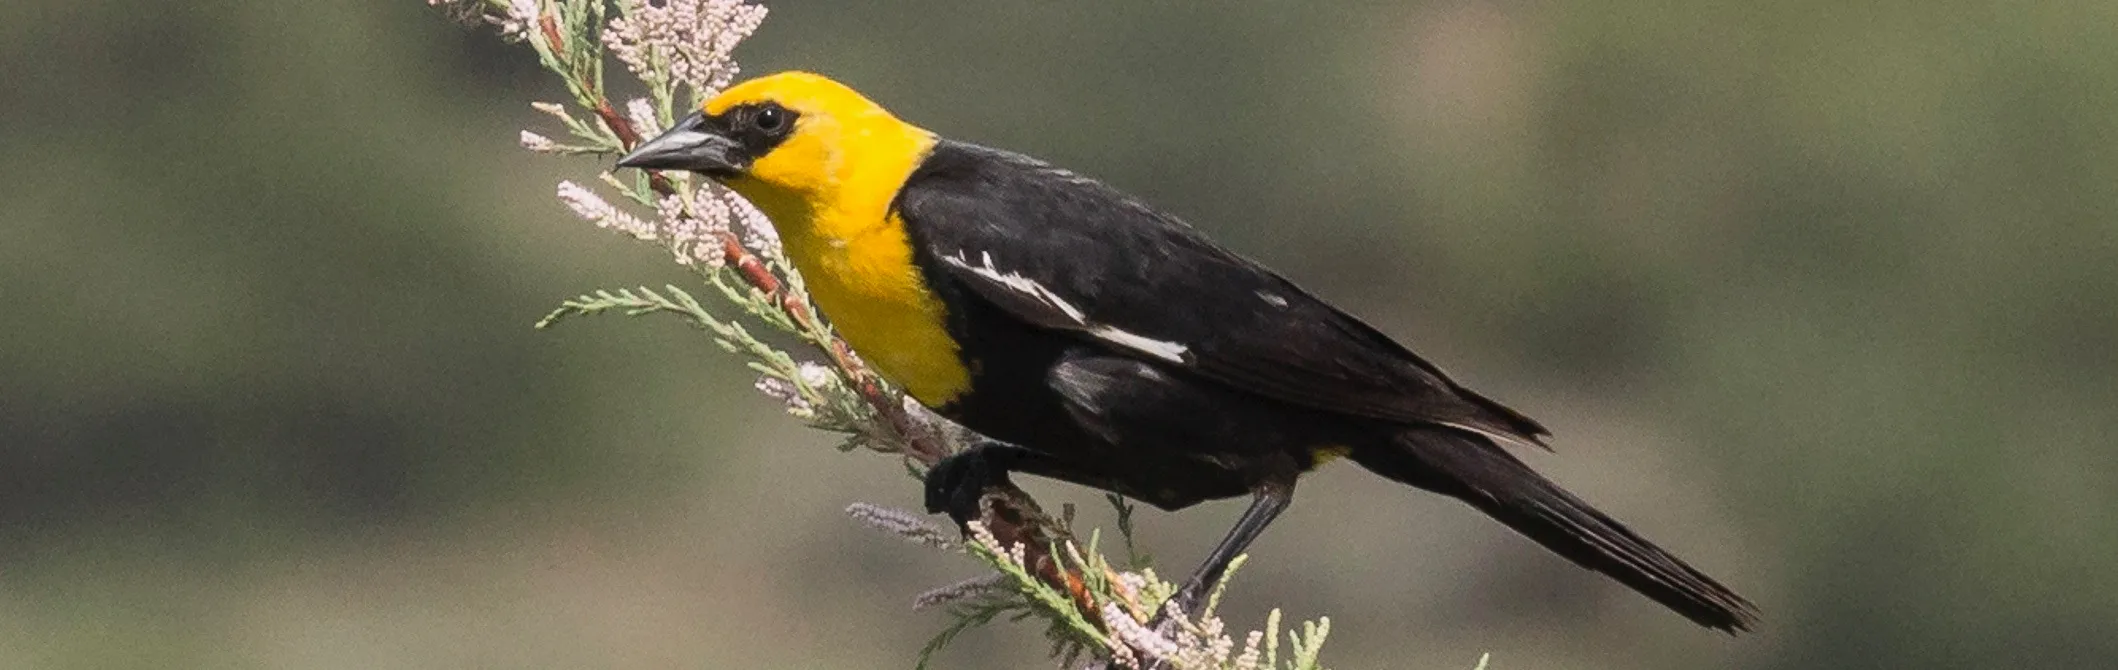 Yellow-headed Blackbird, by Charles Slocombe